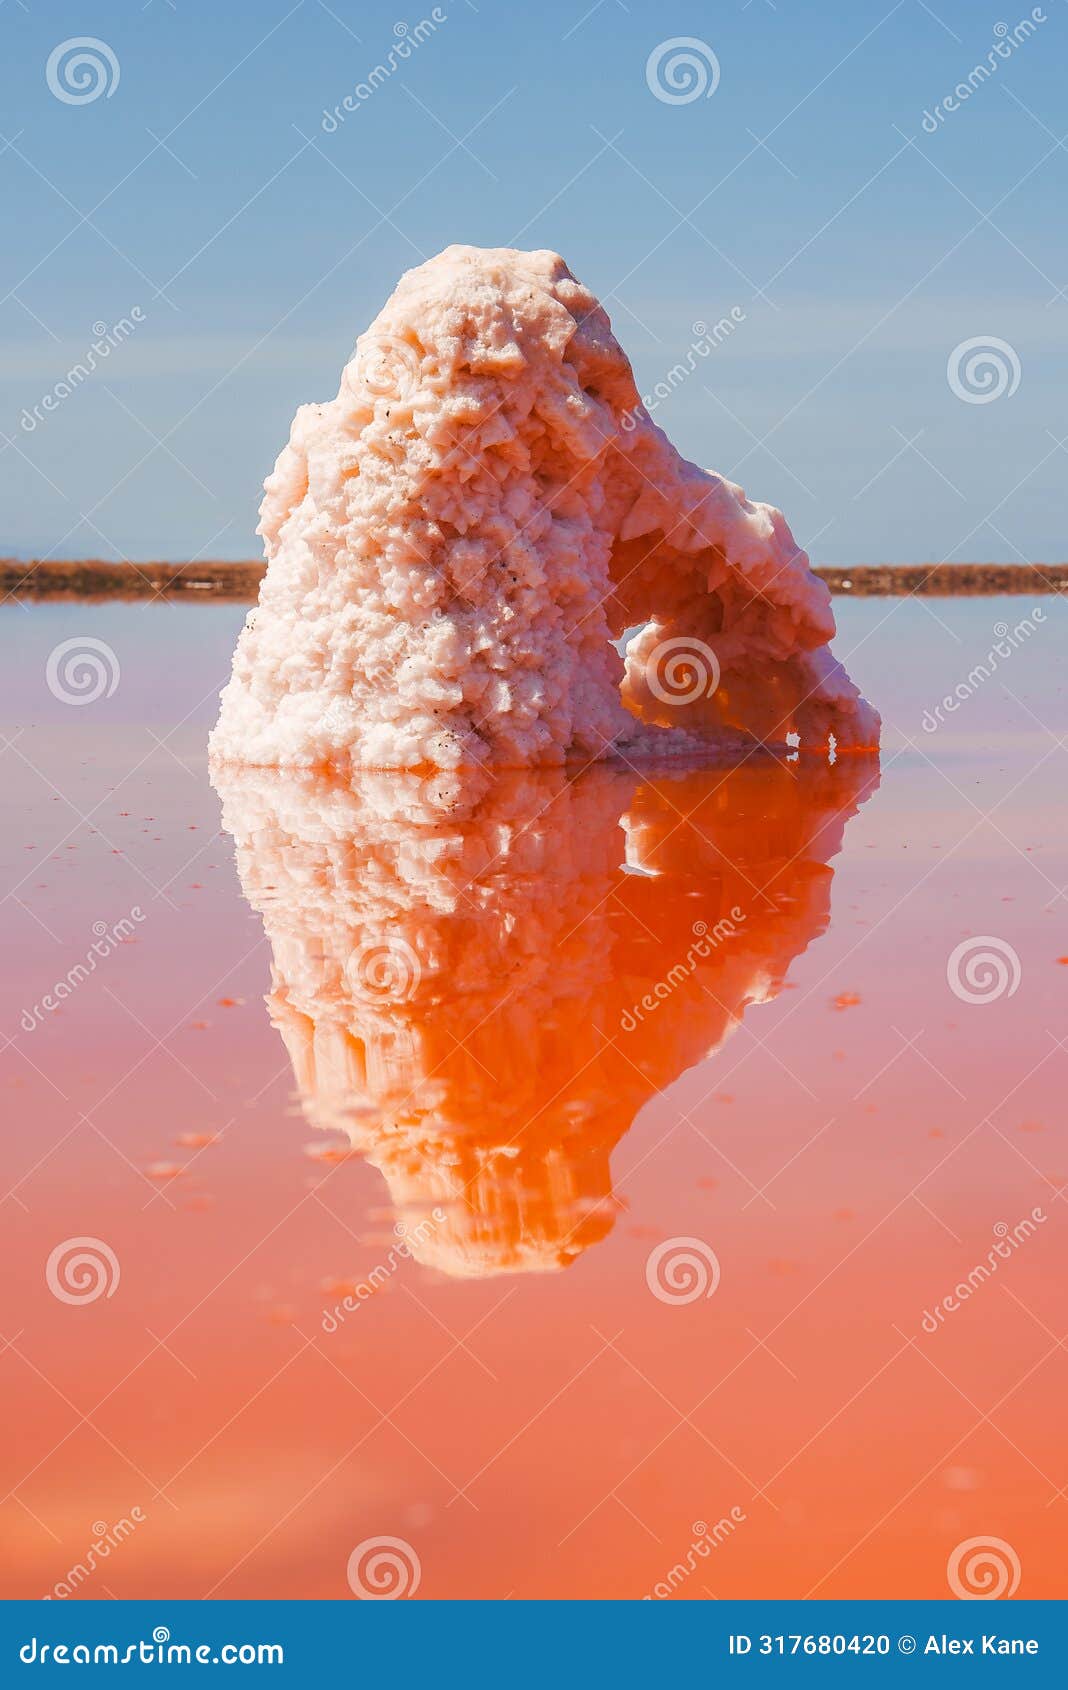 unique salt formation at alviso pink lake park, california